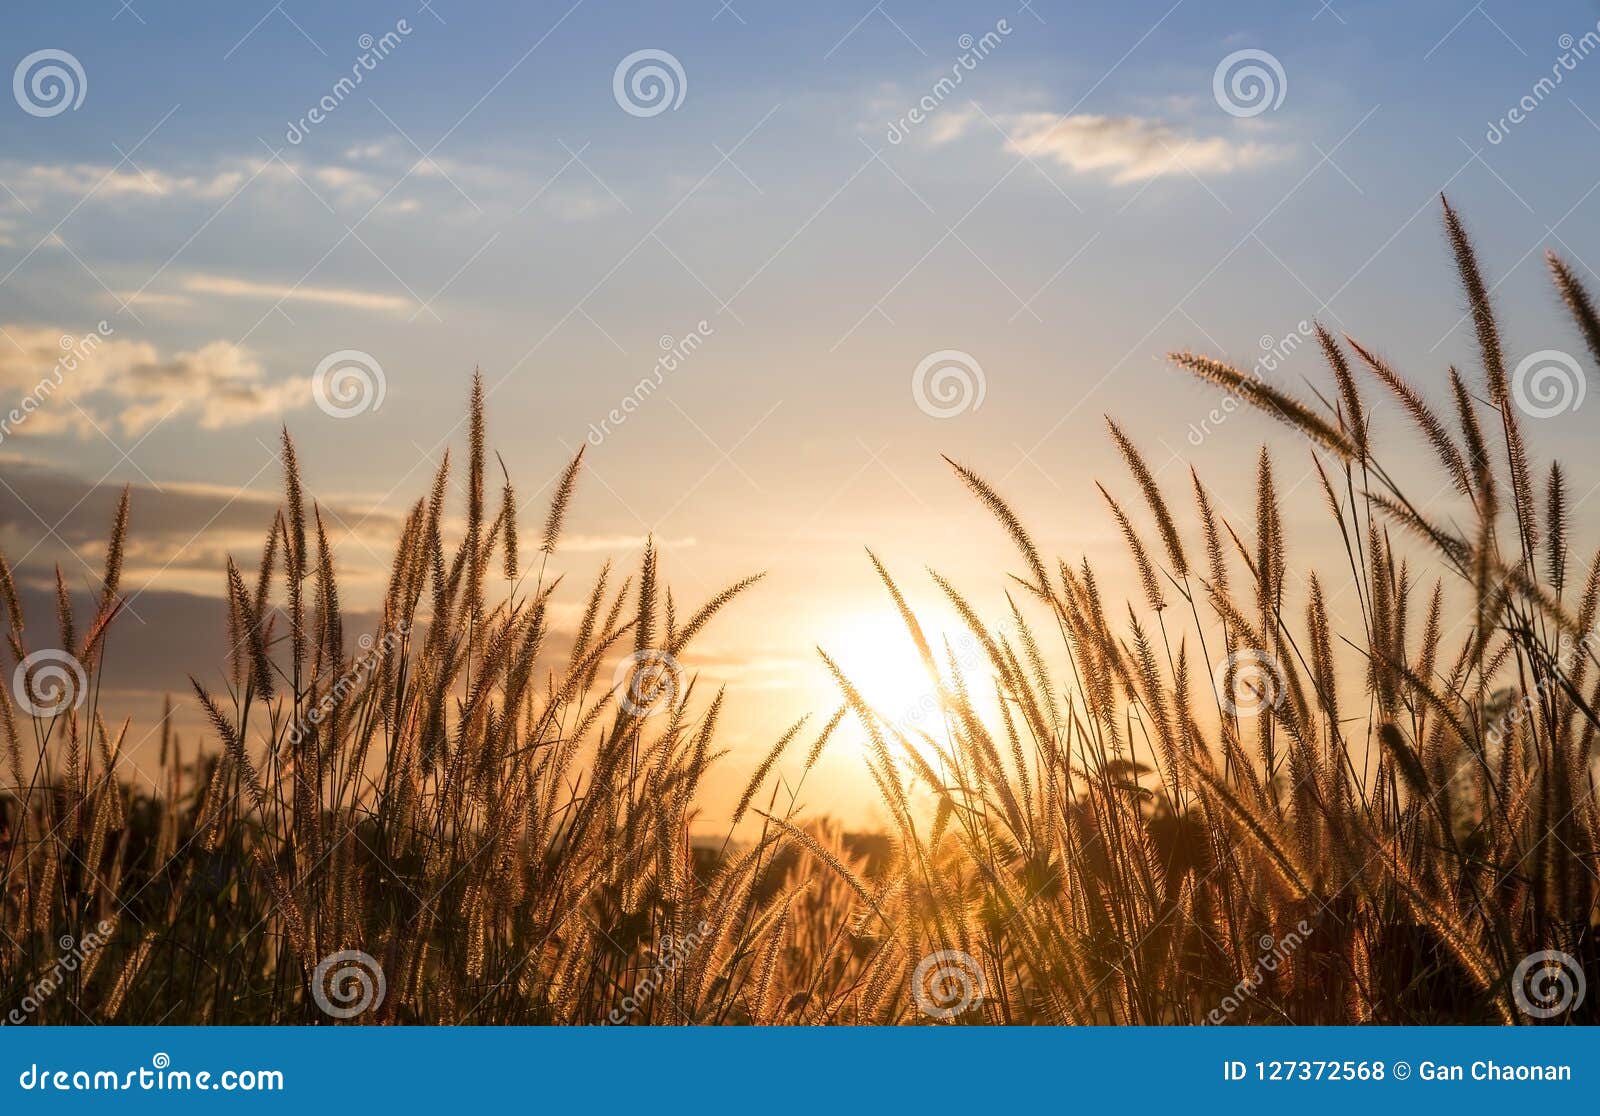 Golden Grass, Sunset Background. Stock Photo - Image of background